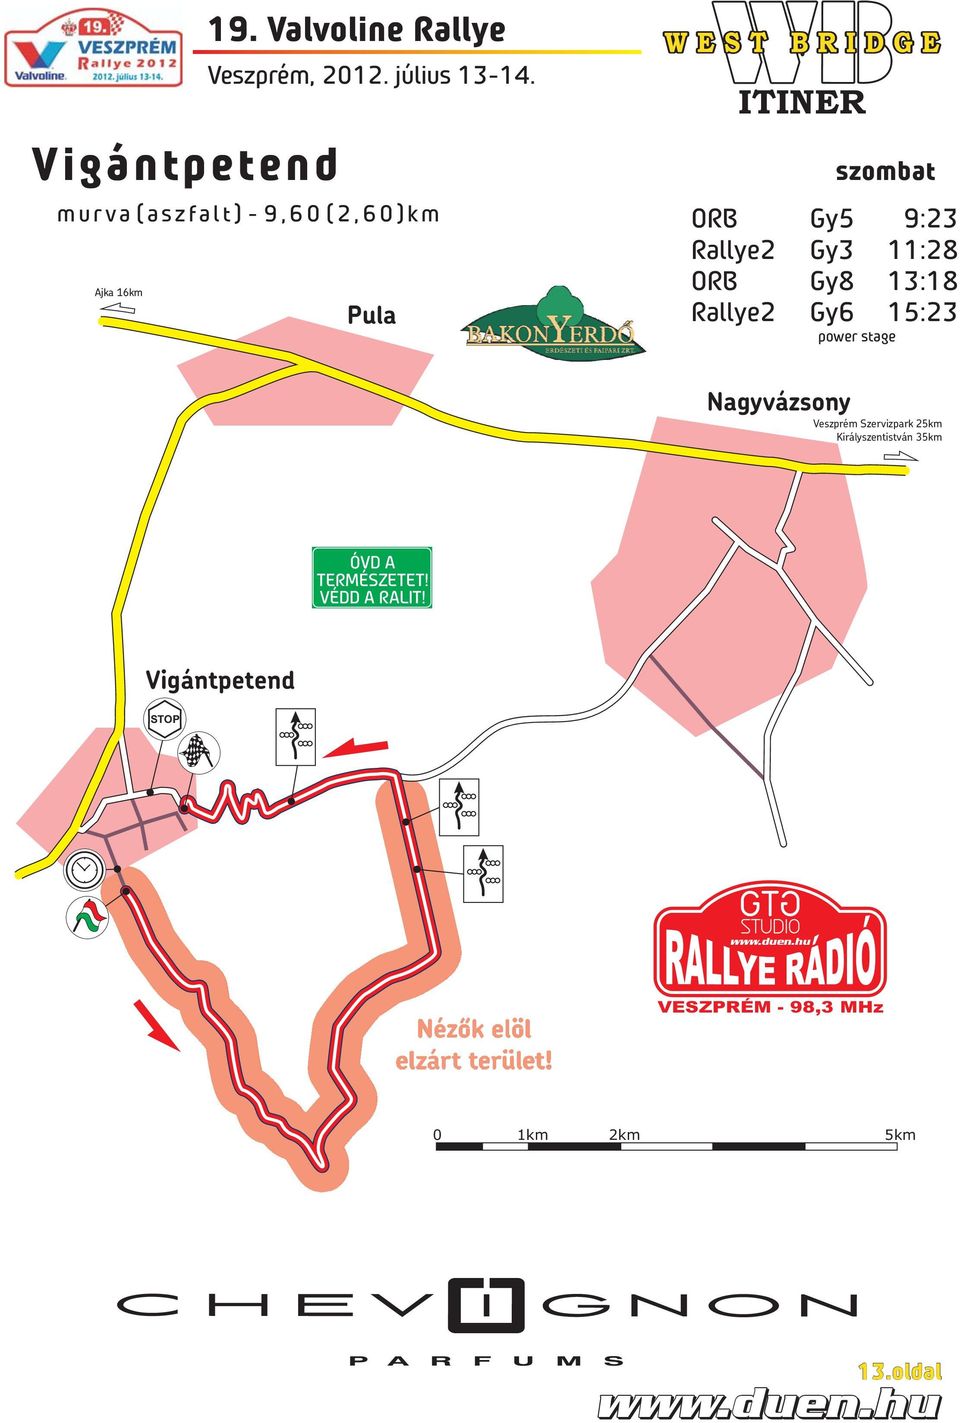 Rallye2 Gy3 11:28 Ajka 16km Gy8 13:18 Pula Rallye2 Gy6 15:23 power stage